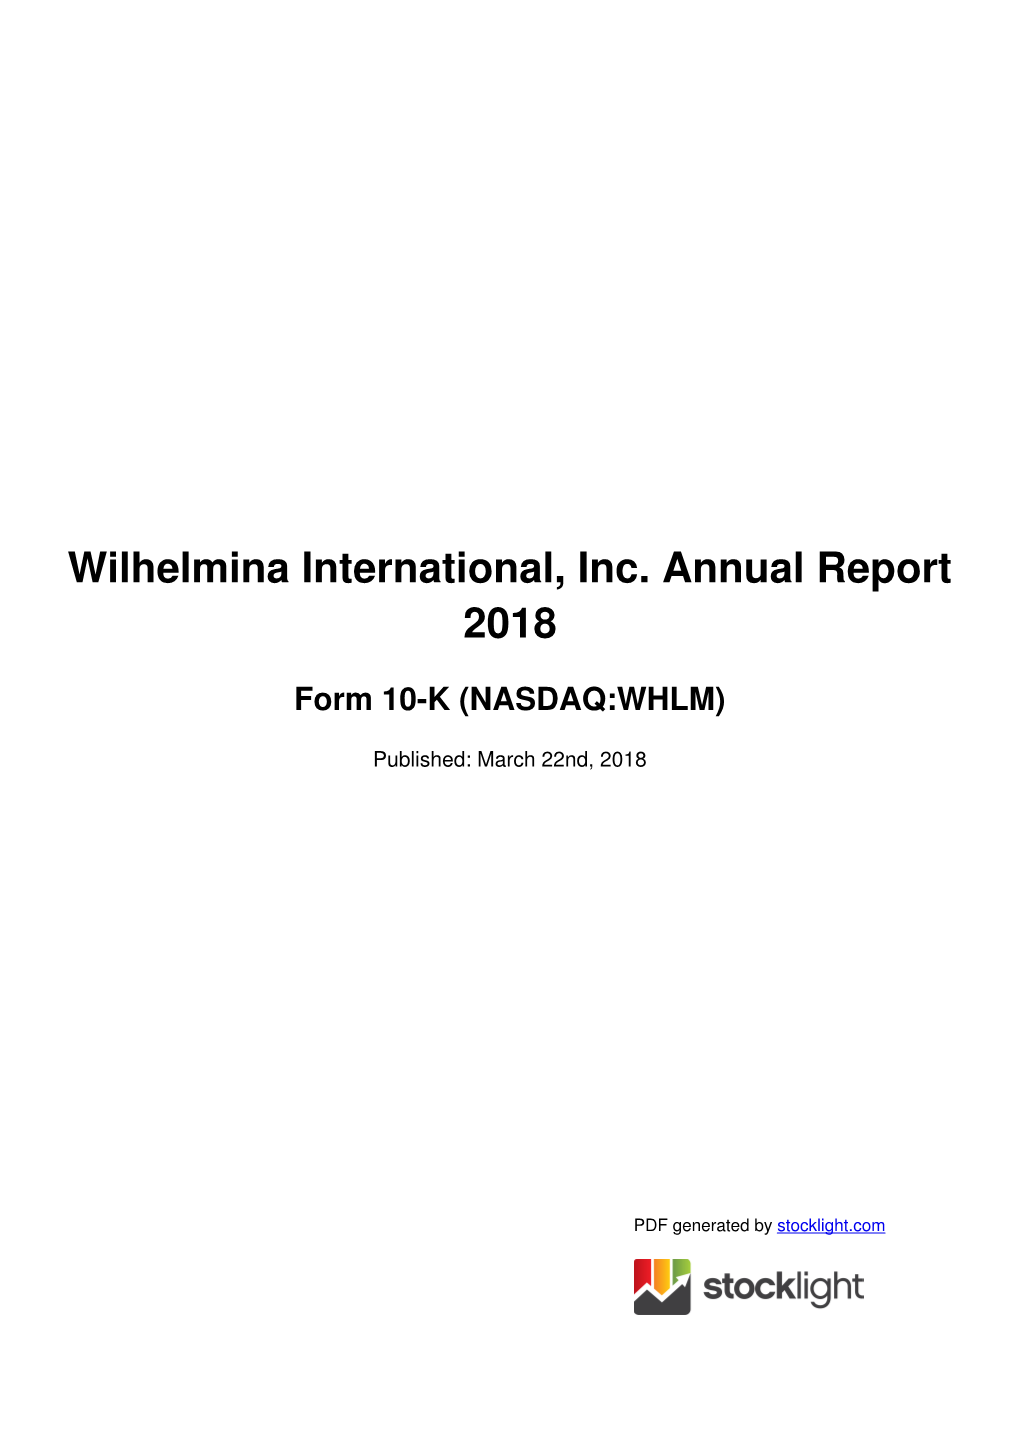 Wilhelmina International, Inc. Annual Report 2018